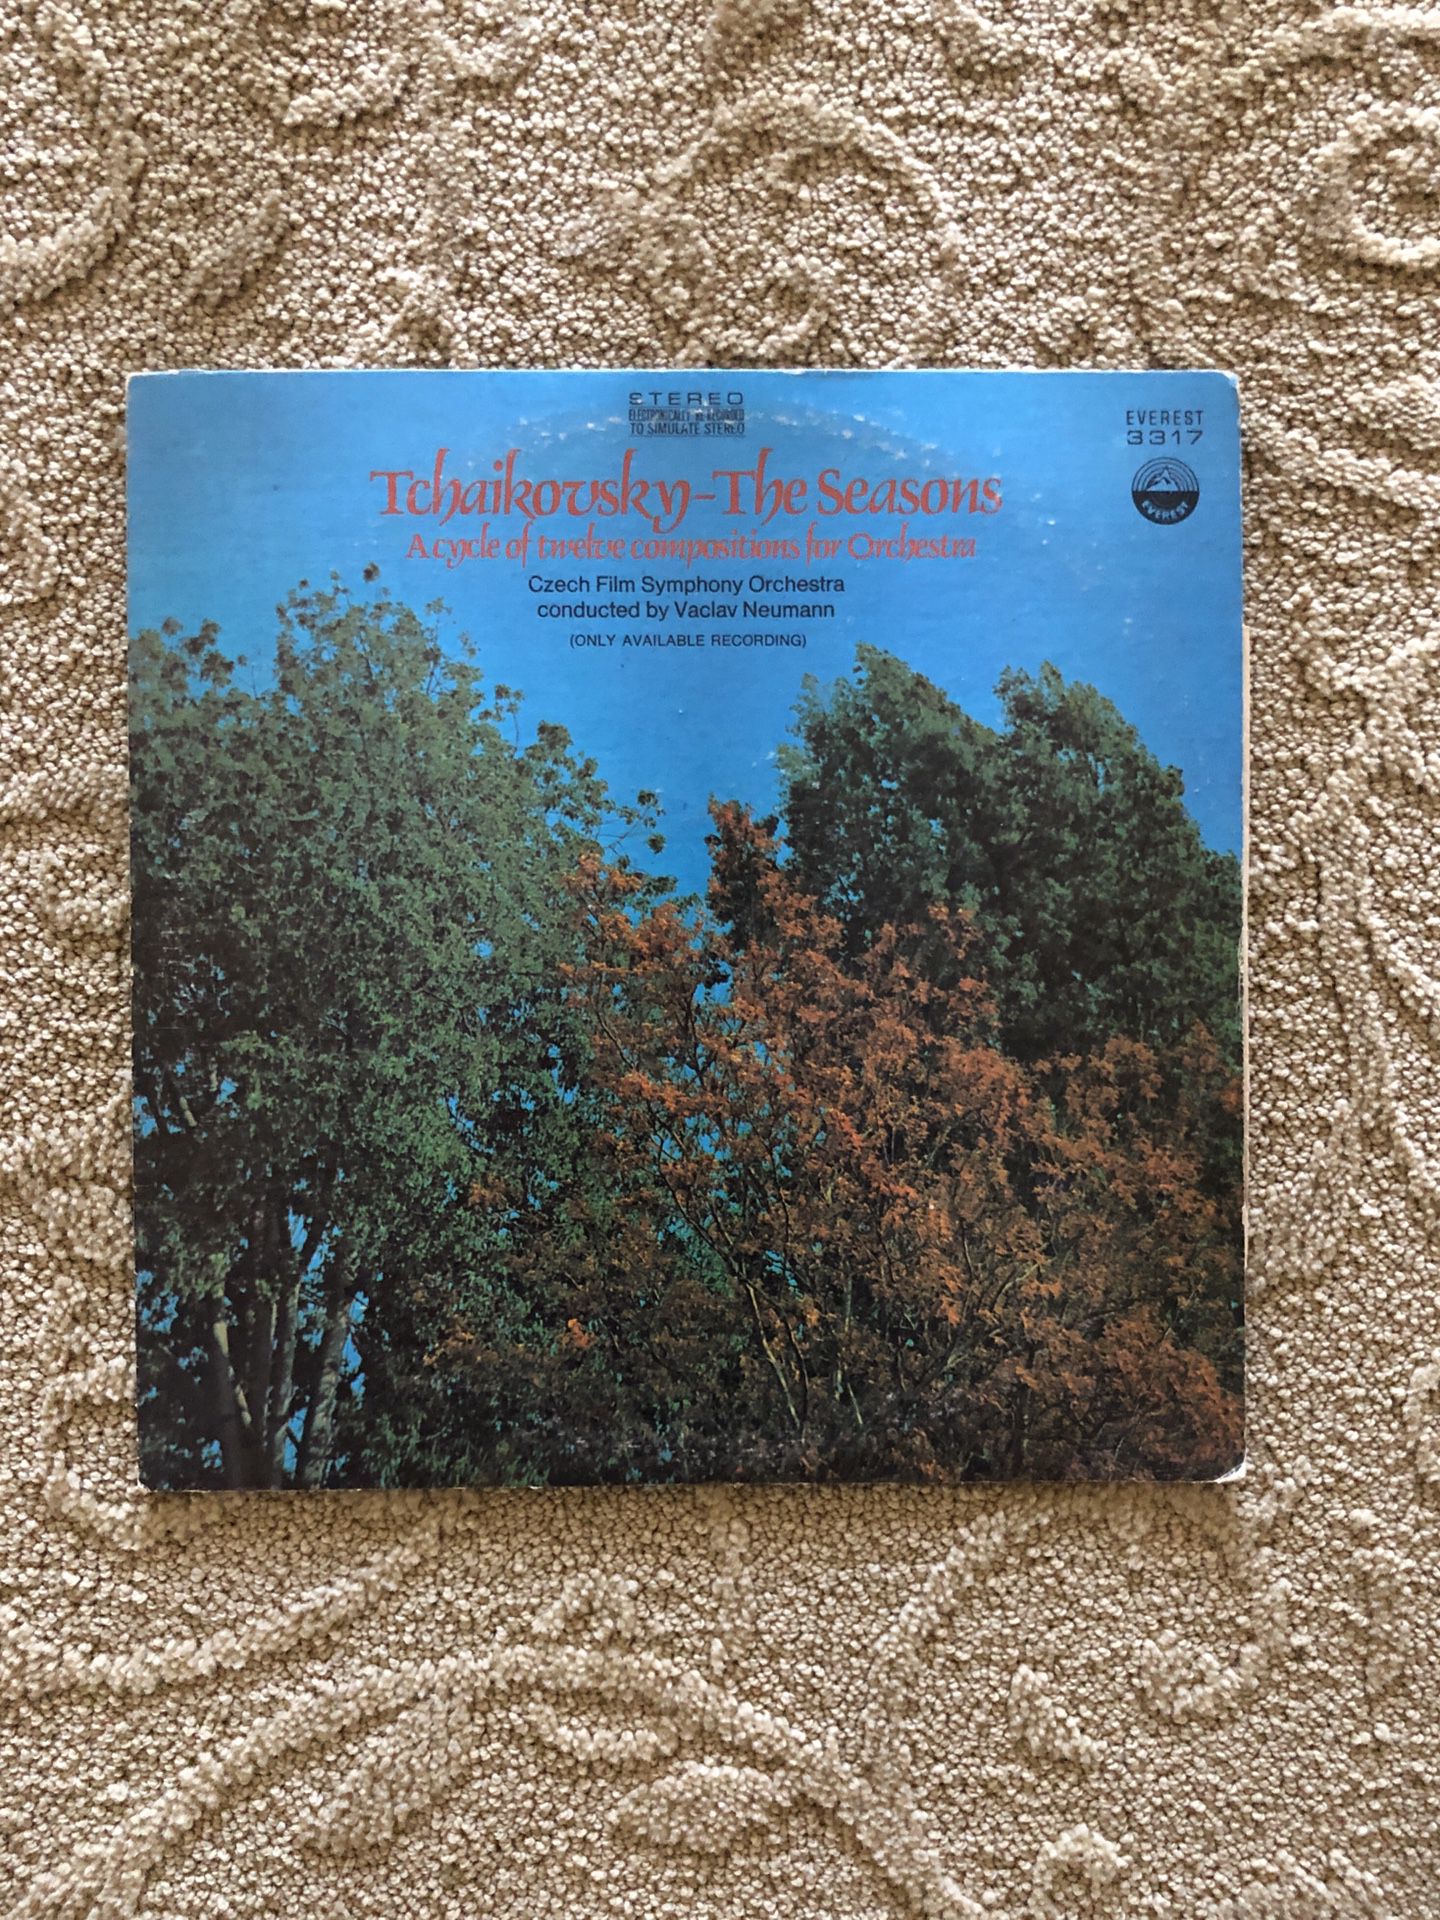 Tchaikovsky’s The Seasons Record